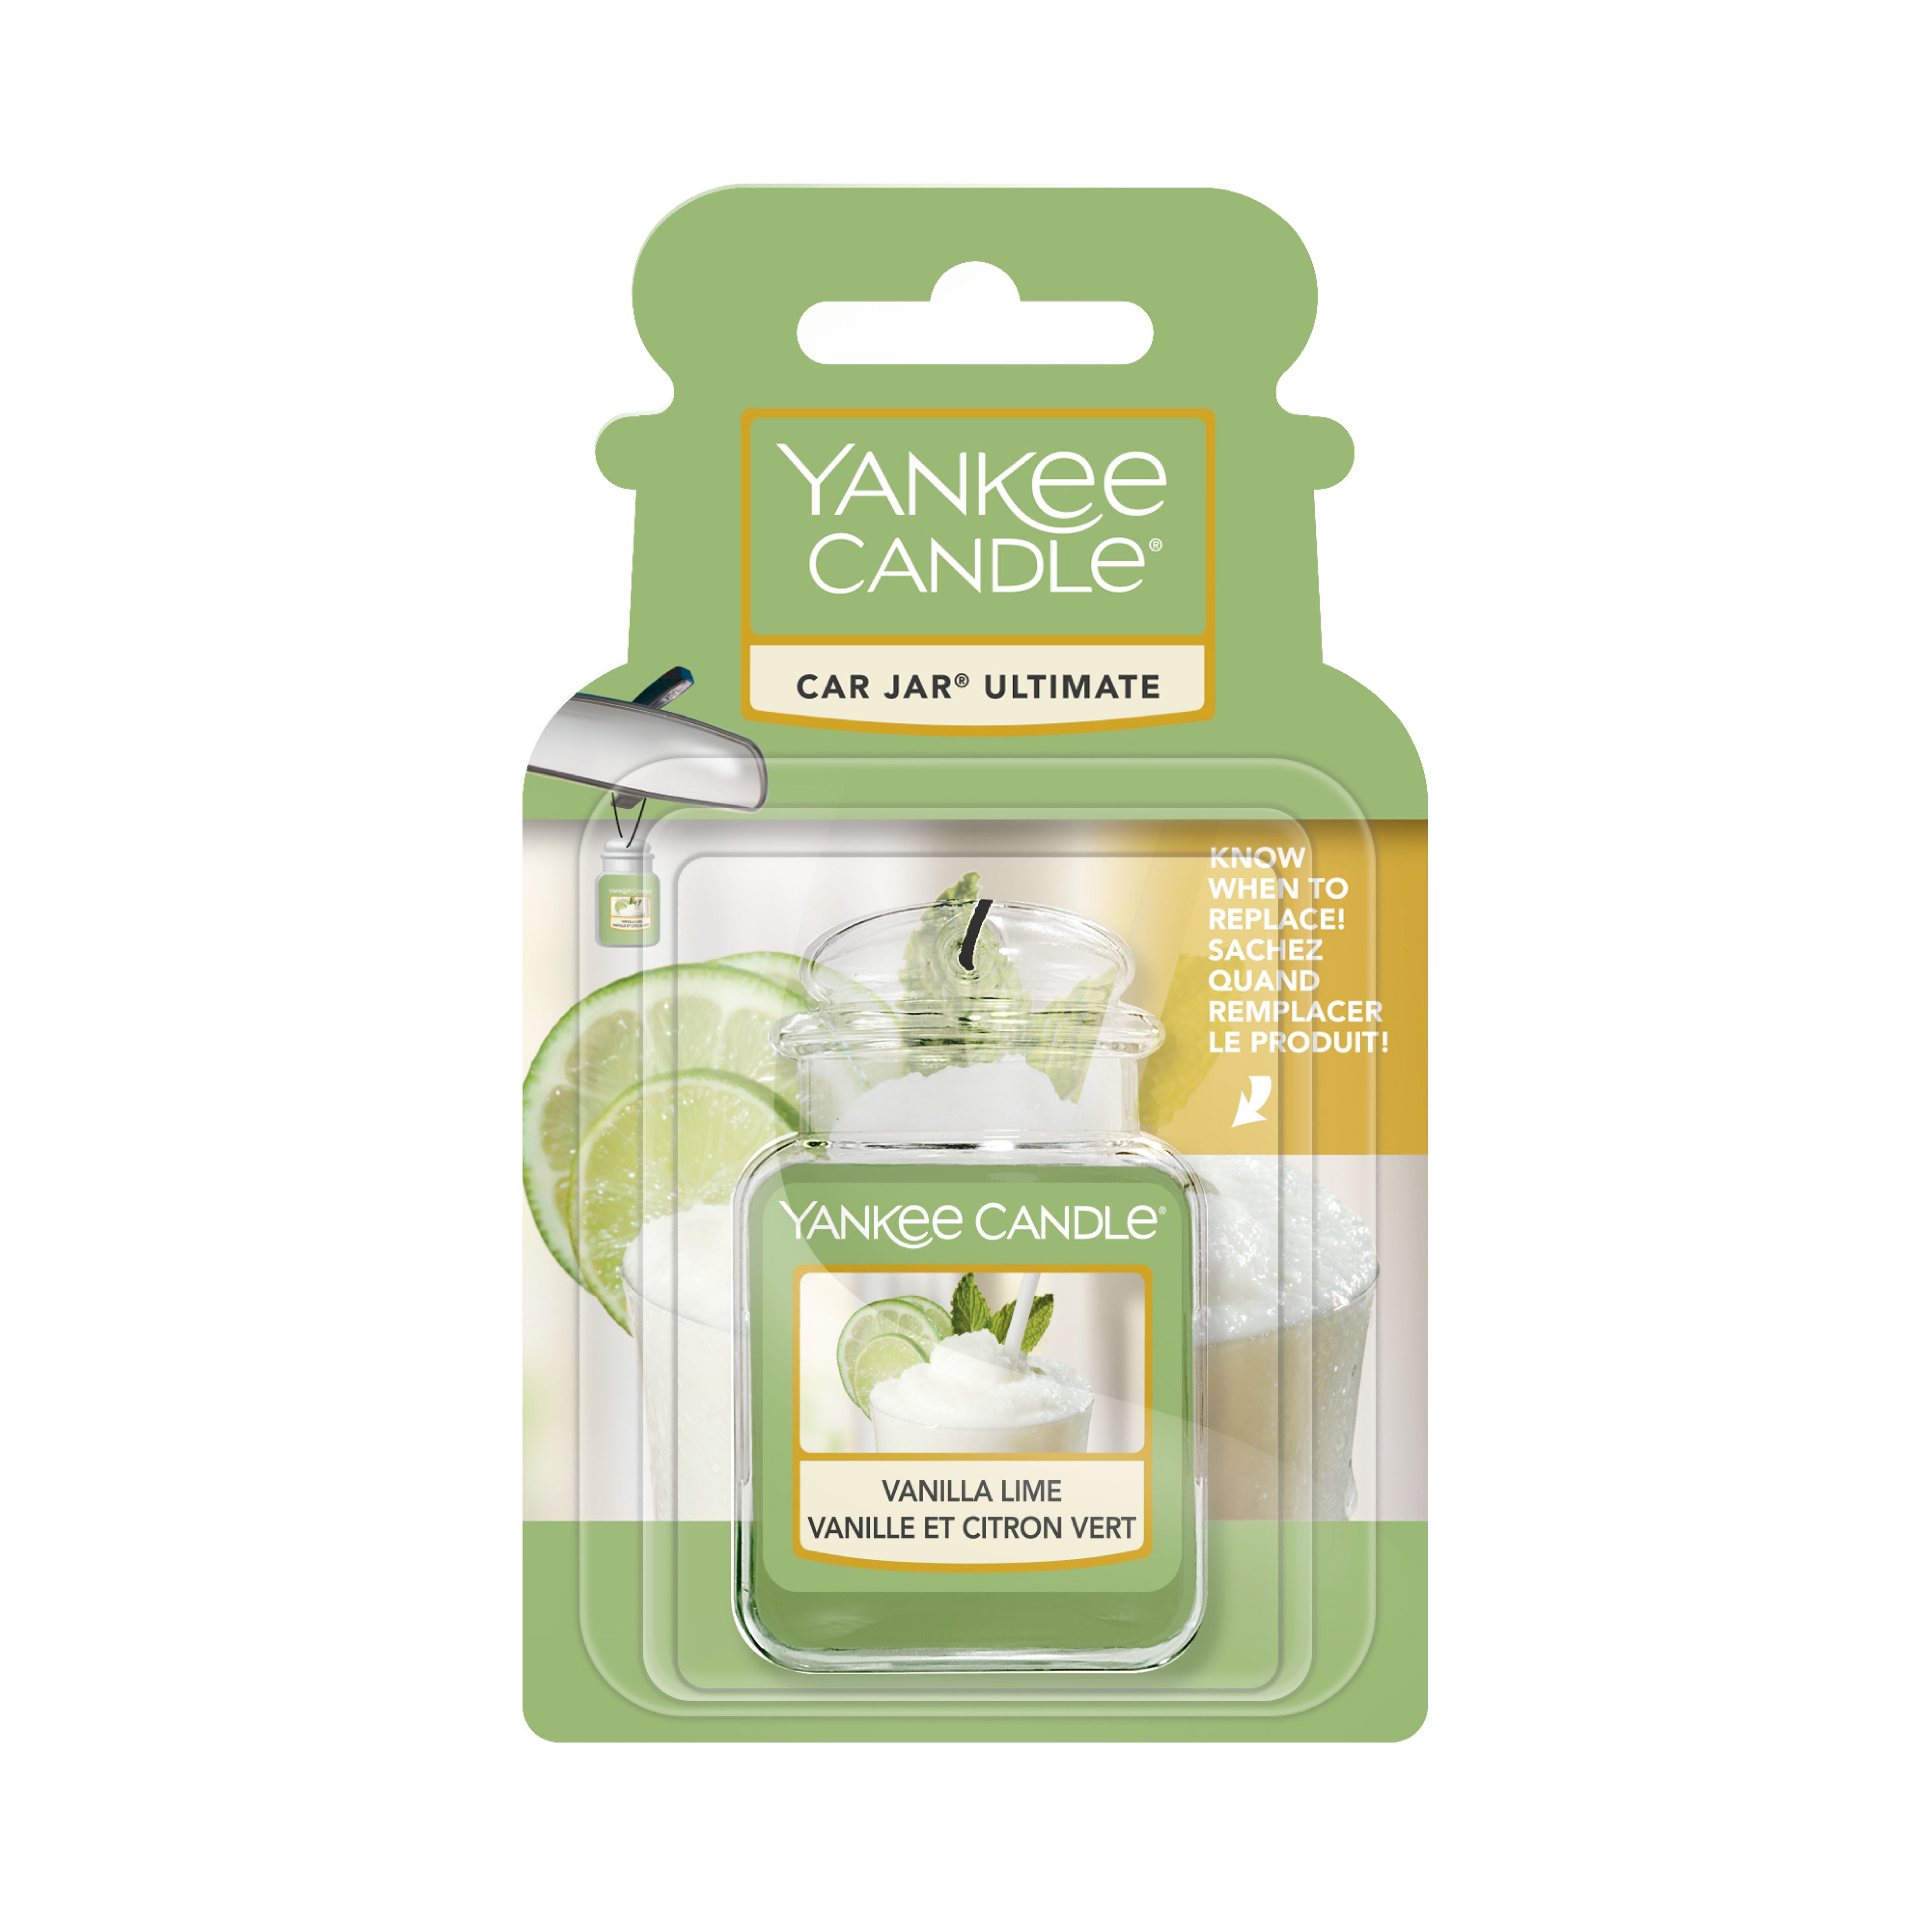 Yankee Candle Car Jar Ultimate Vanilla Lime Air freshener